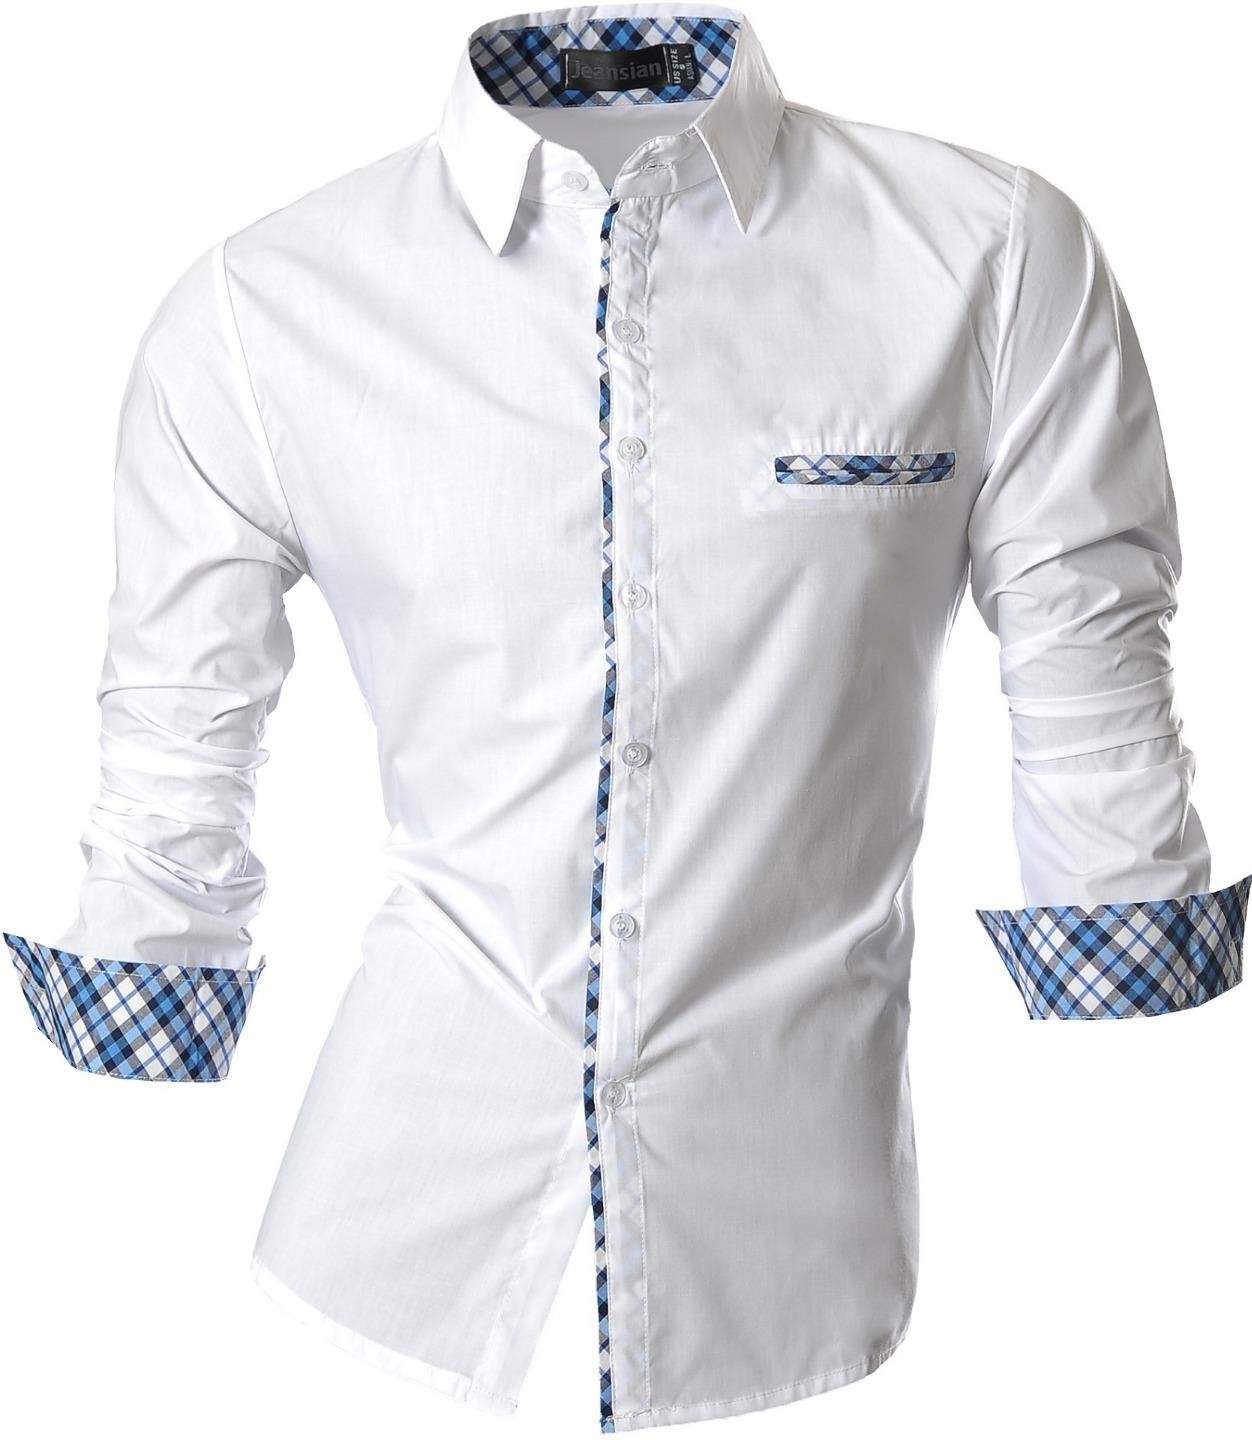 jeansian Herren Freizeit Hemden Slim Long Sleeves Casual Shirts Dress Shirts Tops (USA XL, Z020_White)